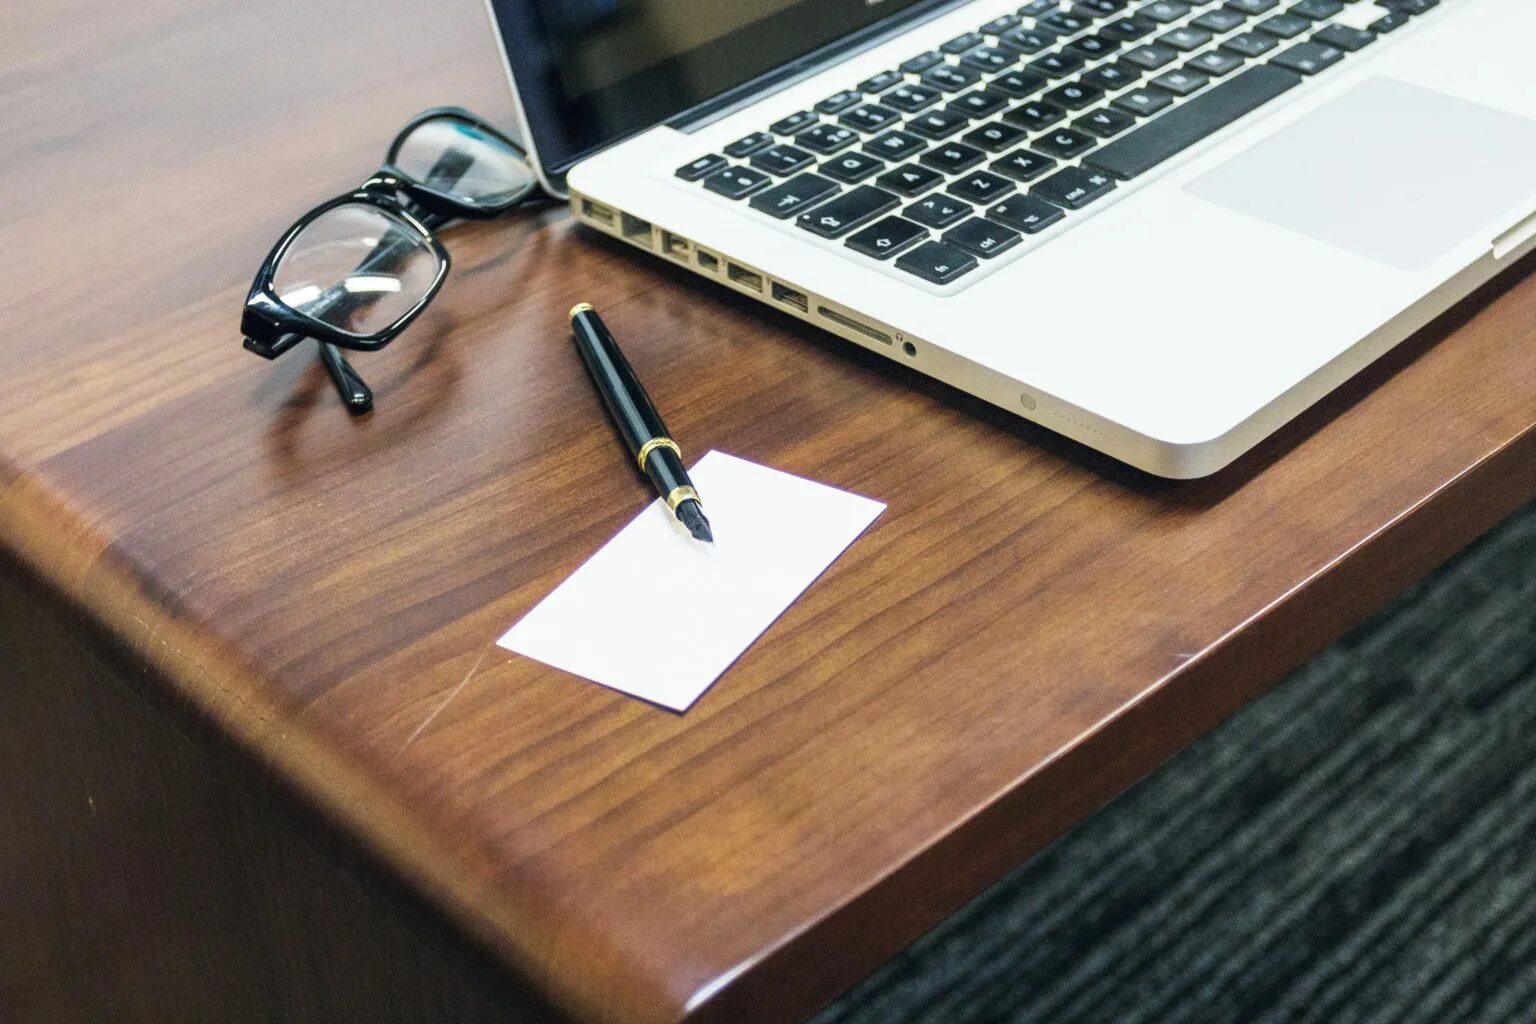 There pens on the table. Бумаги на столе. Ручка на столе. Ручка лежит на столе. Письменный стол с бумагами.